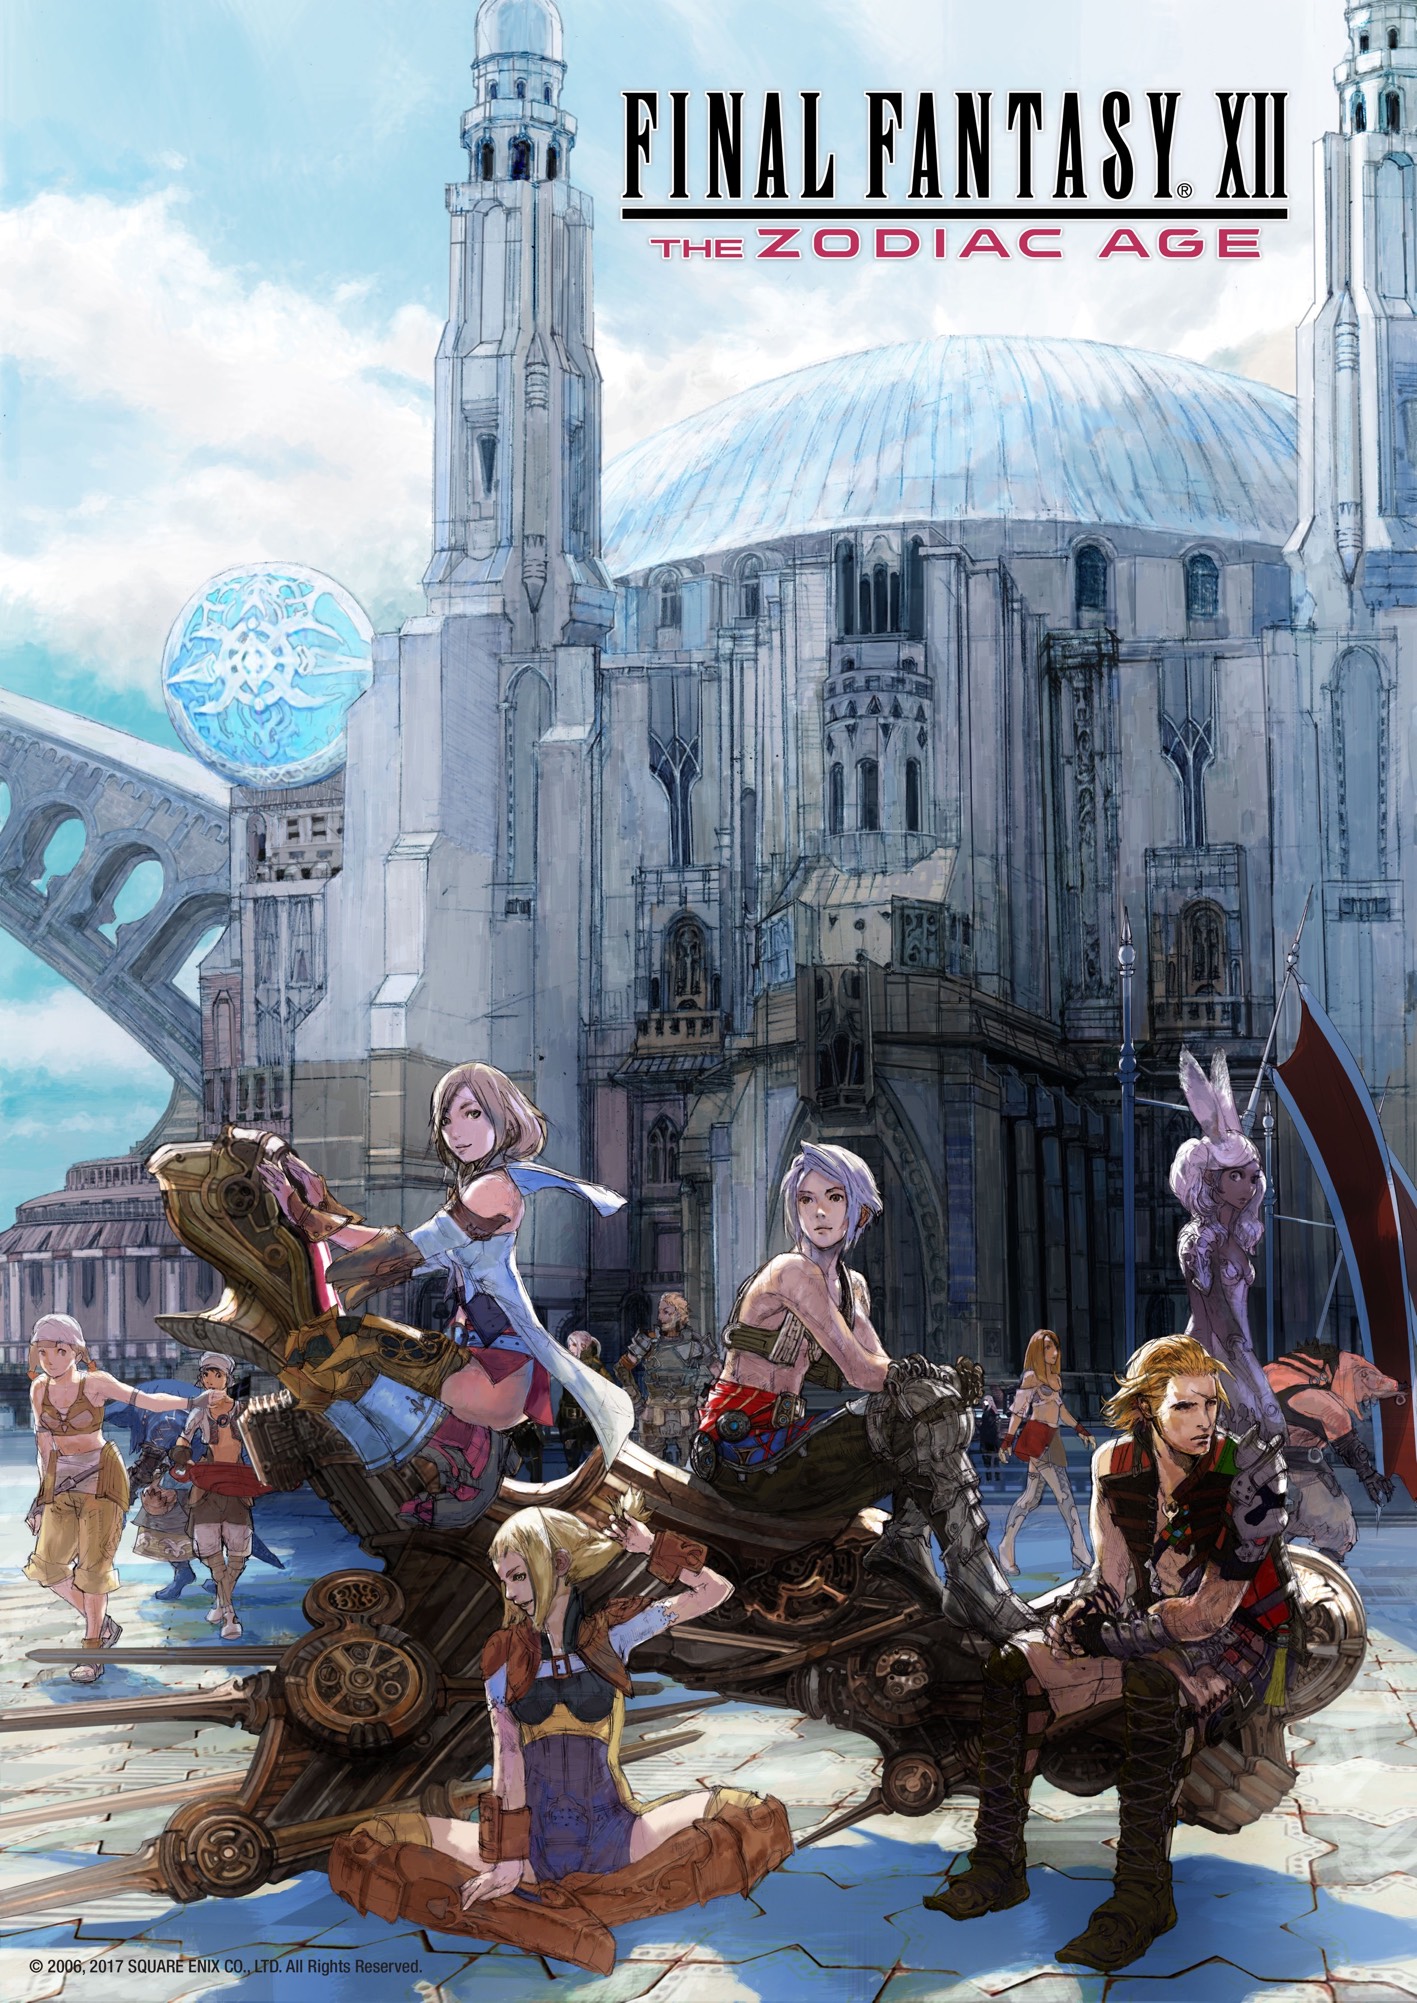 Final Fantasy XII The Zodiac Age Artwork 029